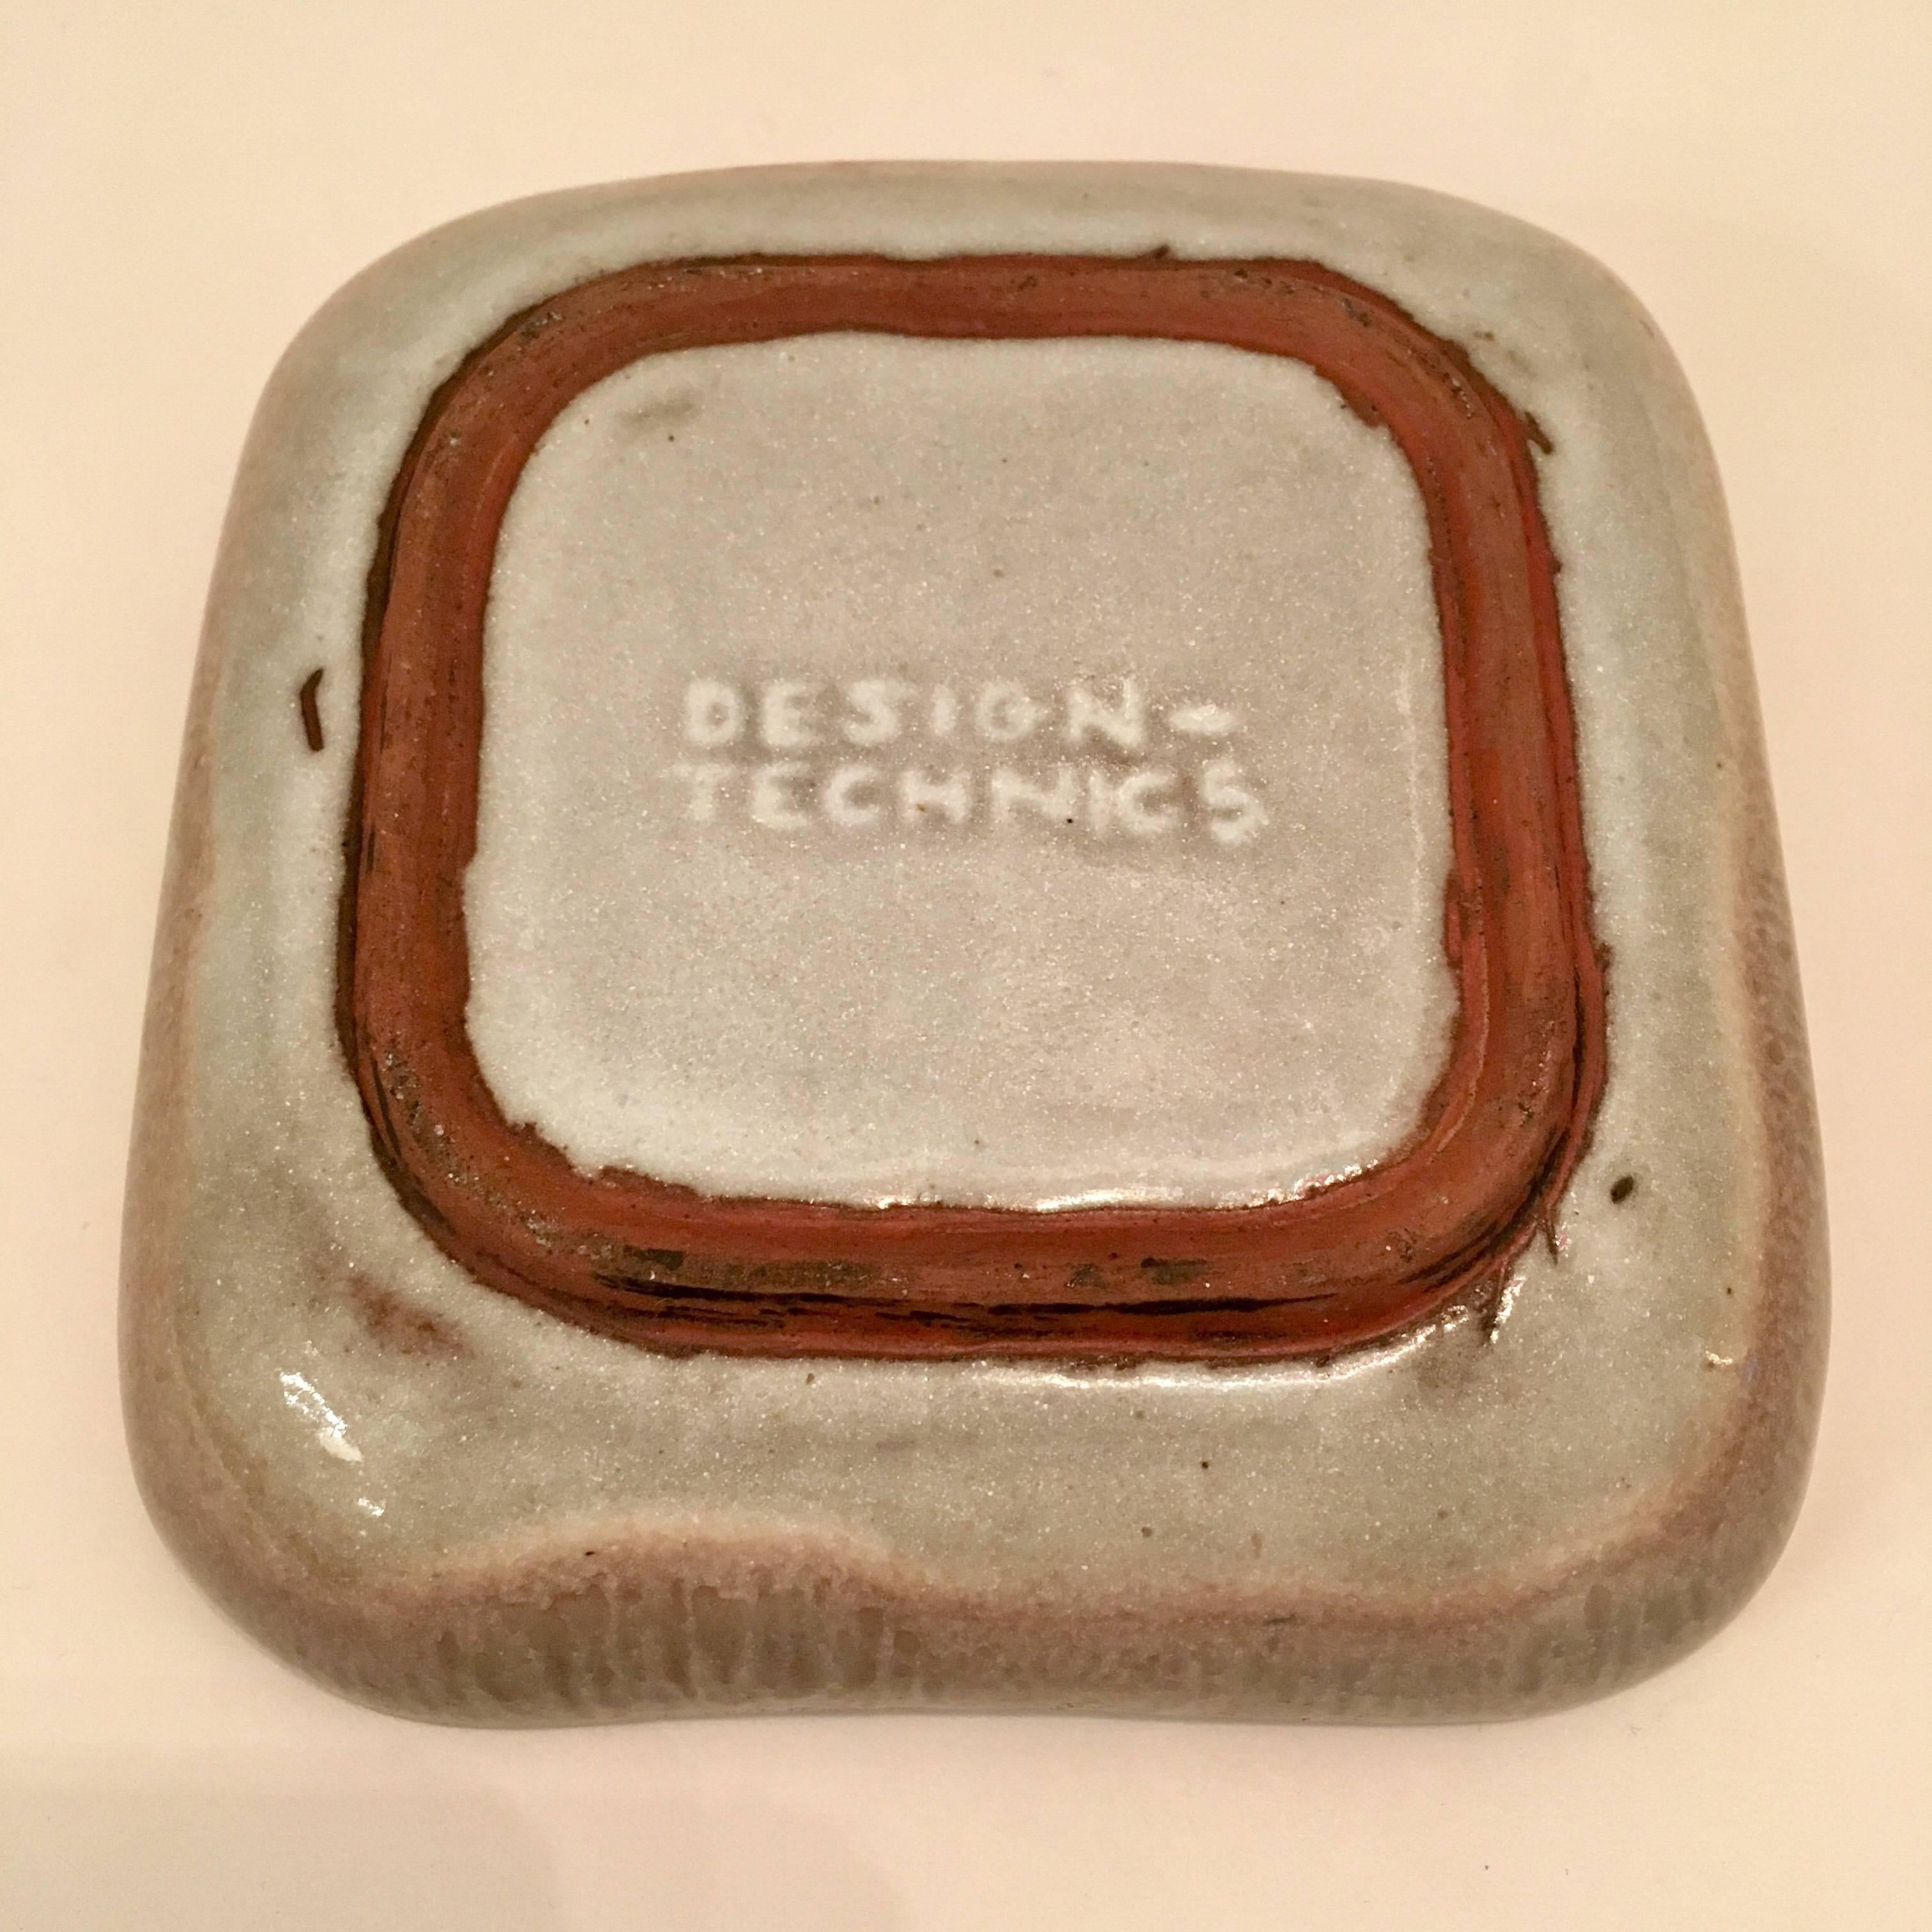 Lee Rosen Design Technics 1960s Ceramic Box In Good Condition In New York, NY